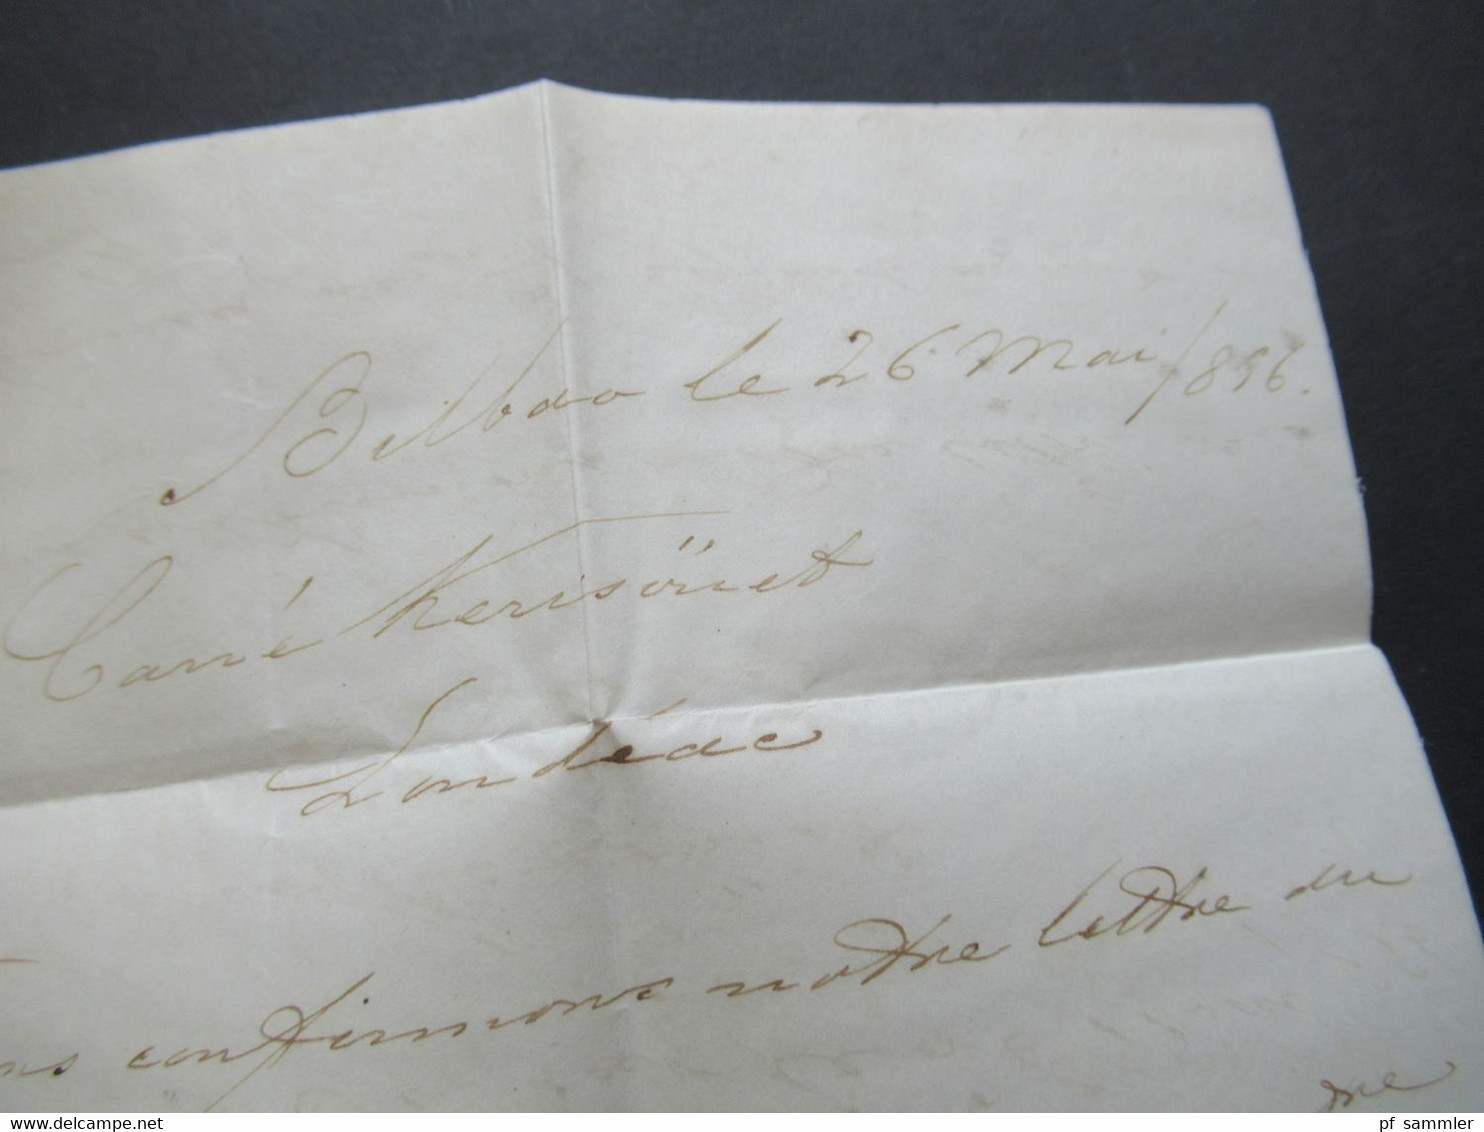 Spanien 1856 Faltbrief mit Inhalt / Auslandsbrief Bilbao - Loudeac 2x rote Stempel und rücks. Bahnpost Pyrenees A Paris